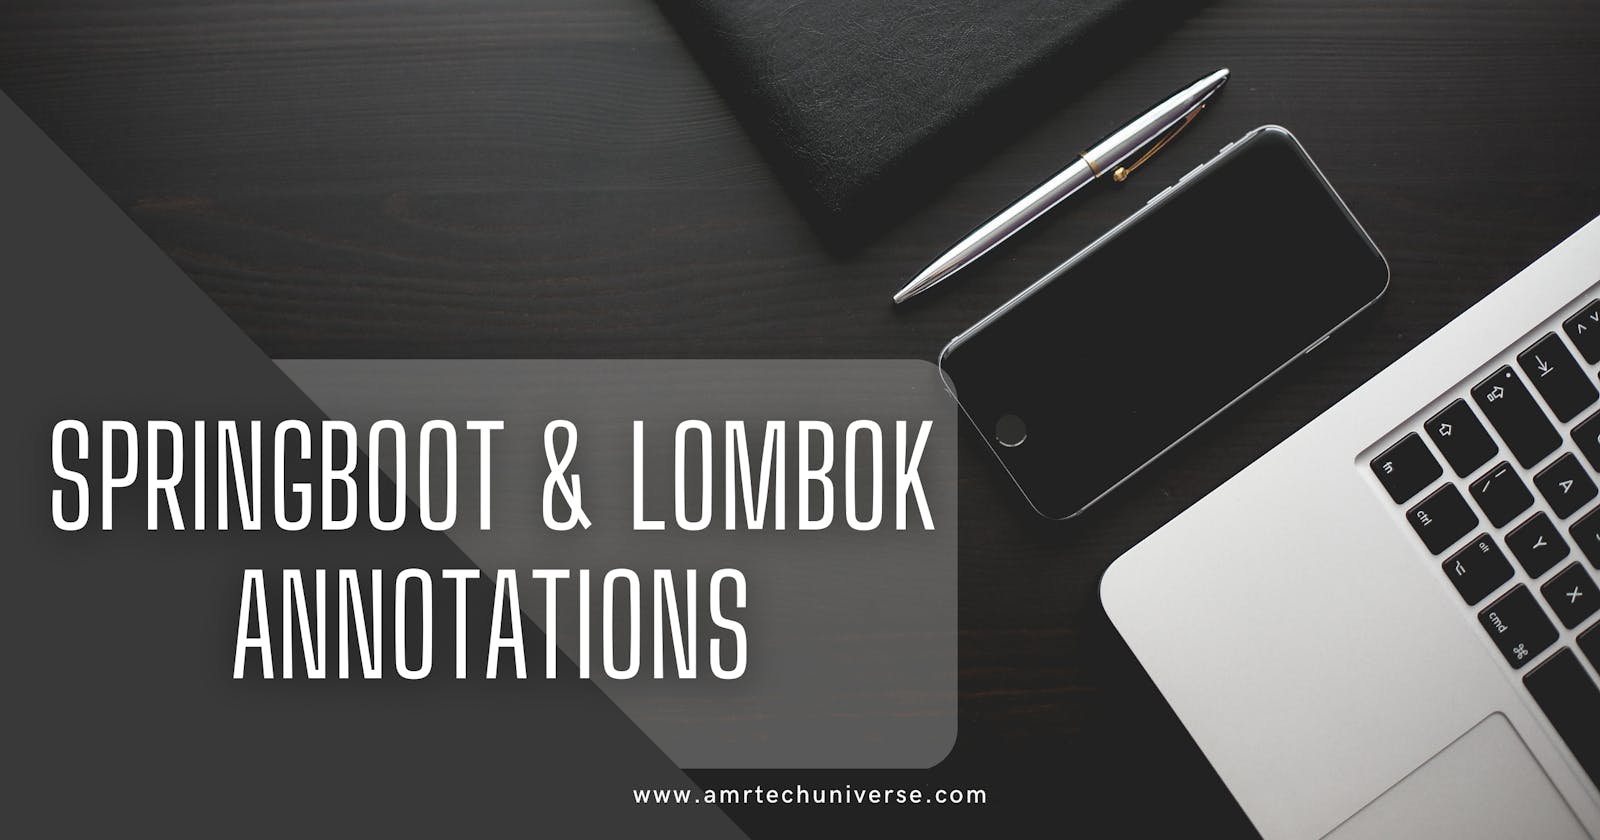 Spring Boot & Lombok annotations: A deeper look